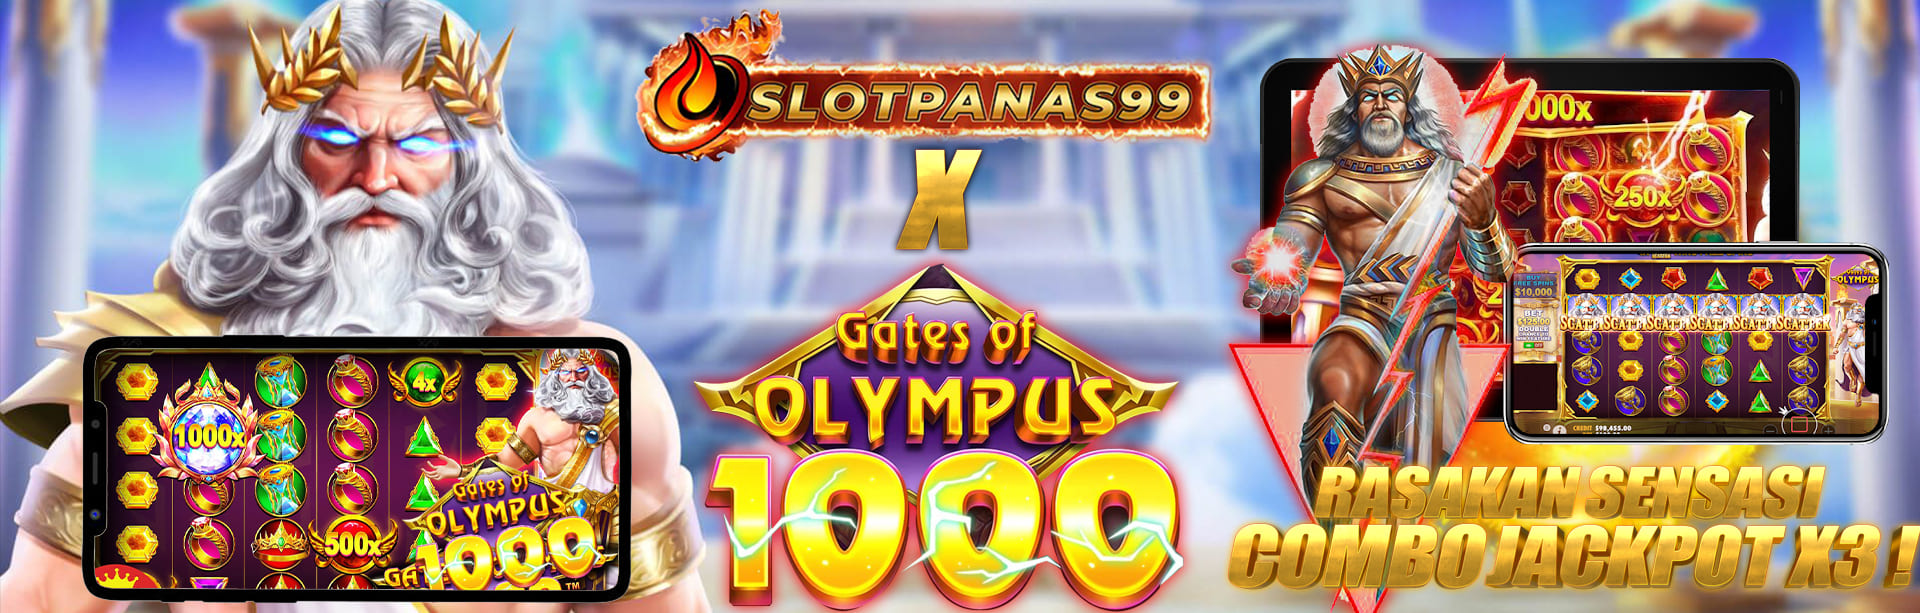 SLOTPANAS99 X GATES OF OLYMPUS 1000 